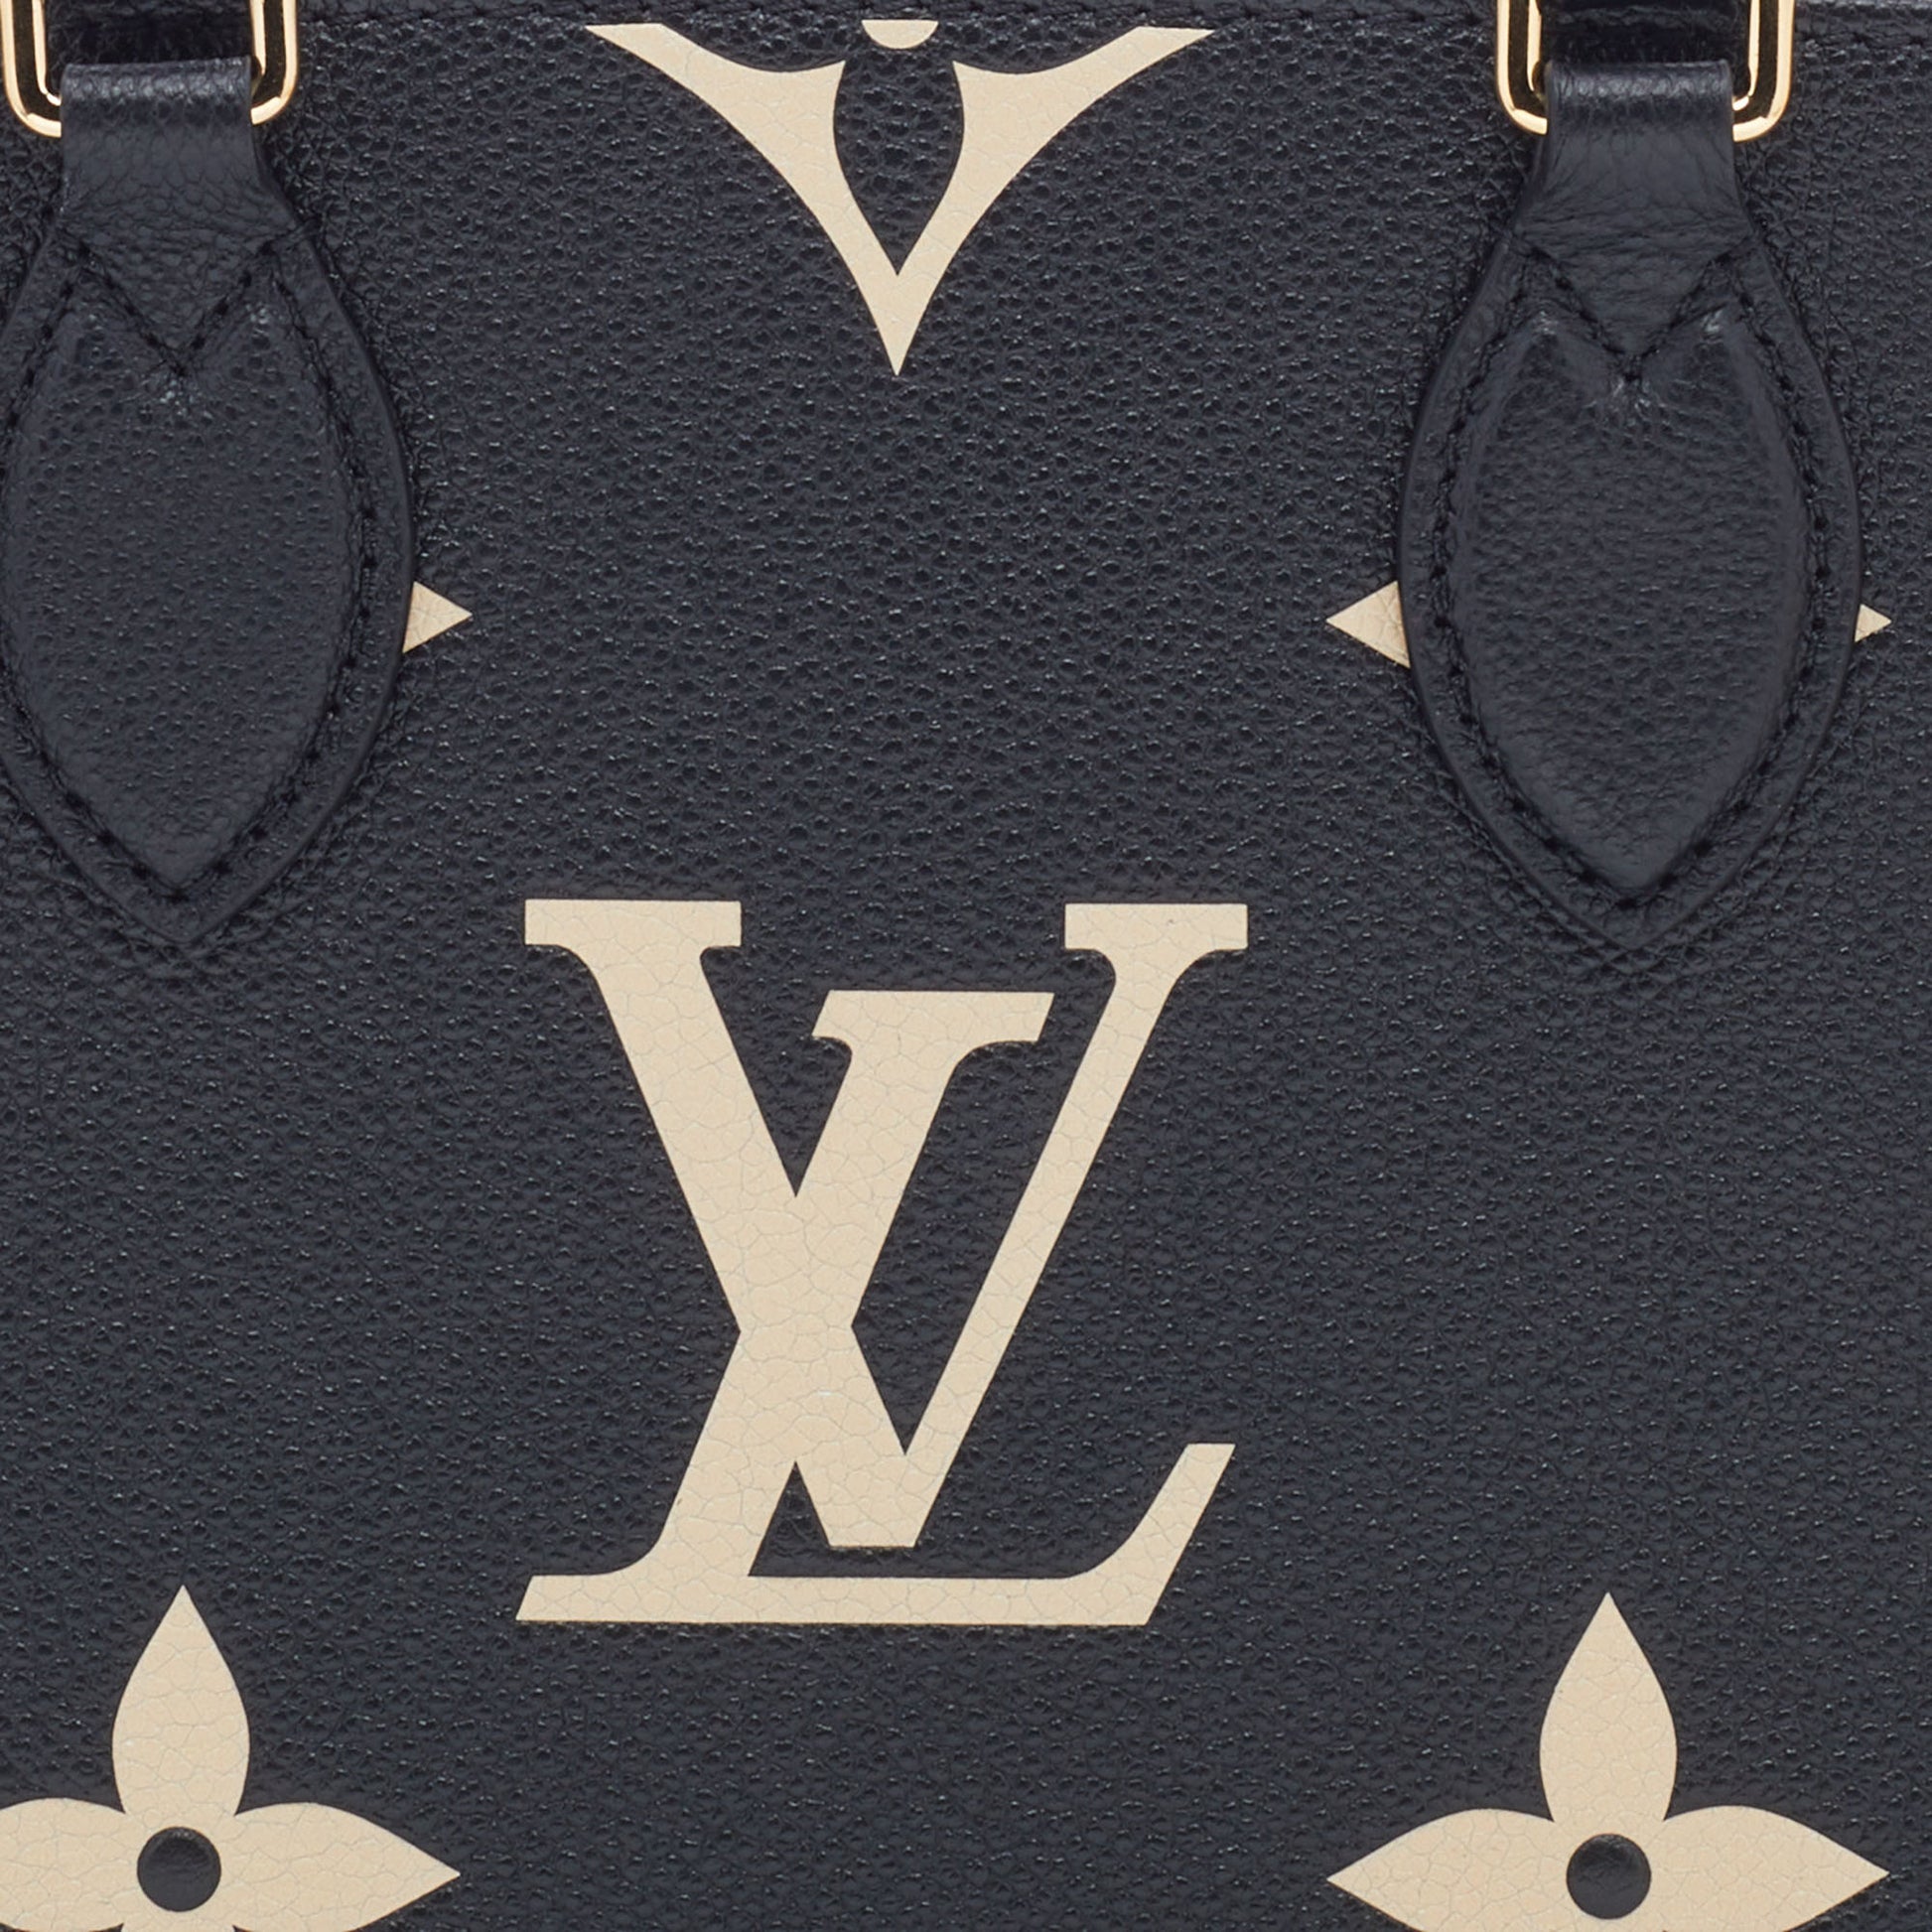 Louis Vuitton Tokyo Monogram Bag Charm - Vintage Lux